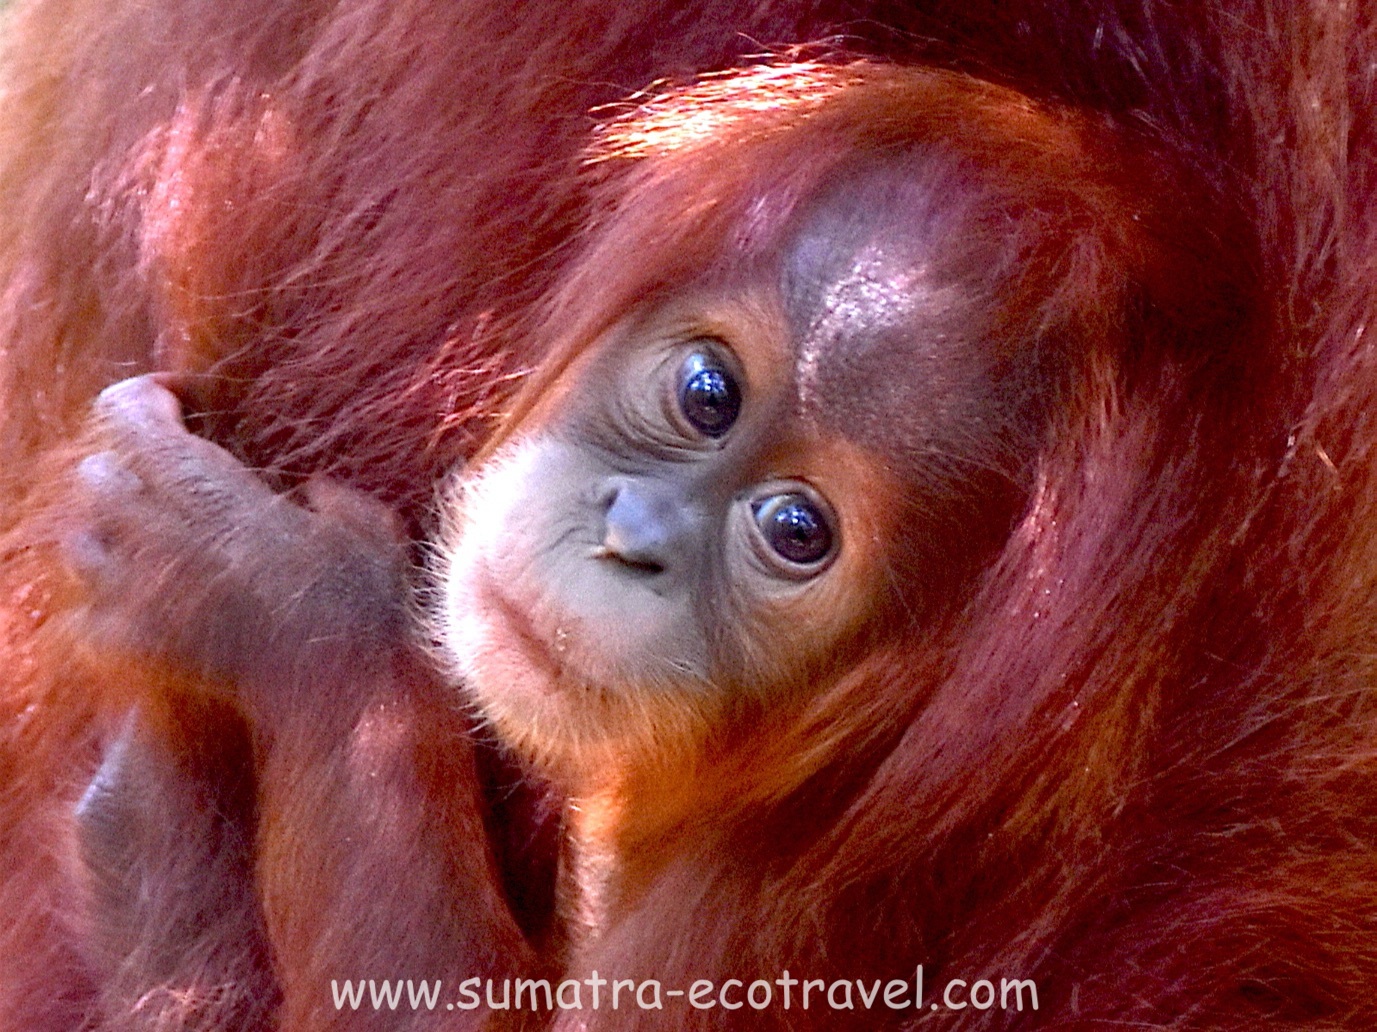 Sumatra Ecotravel Bukit Lawang Photo